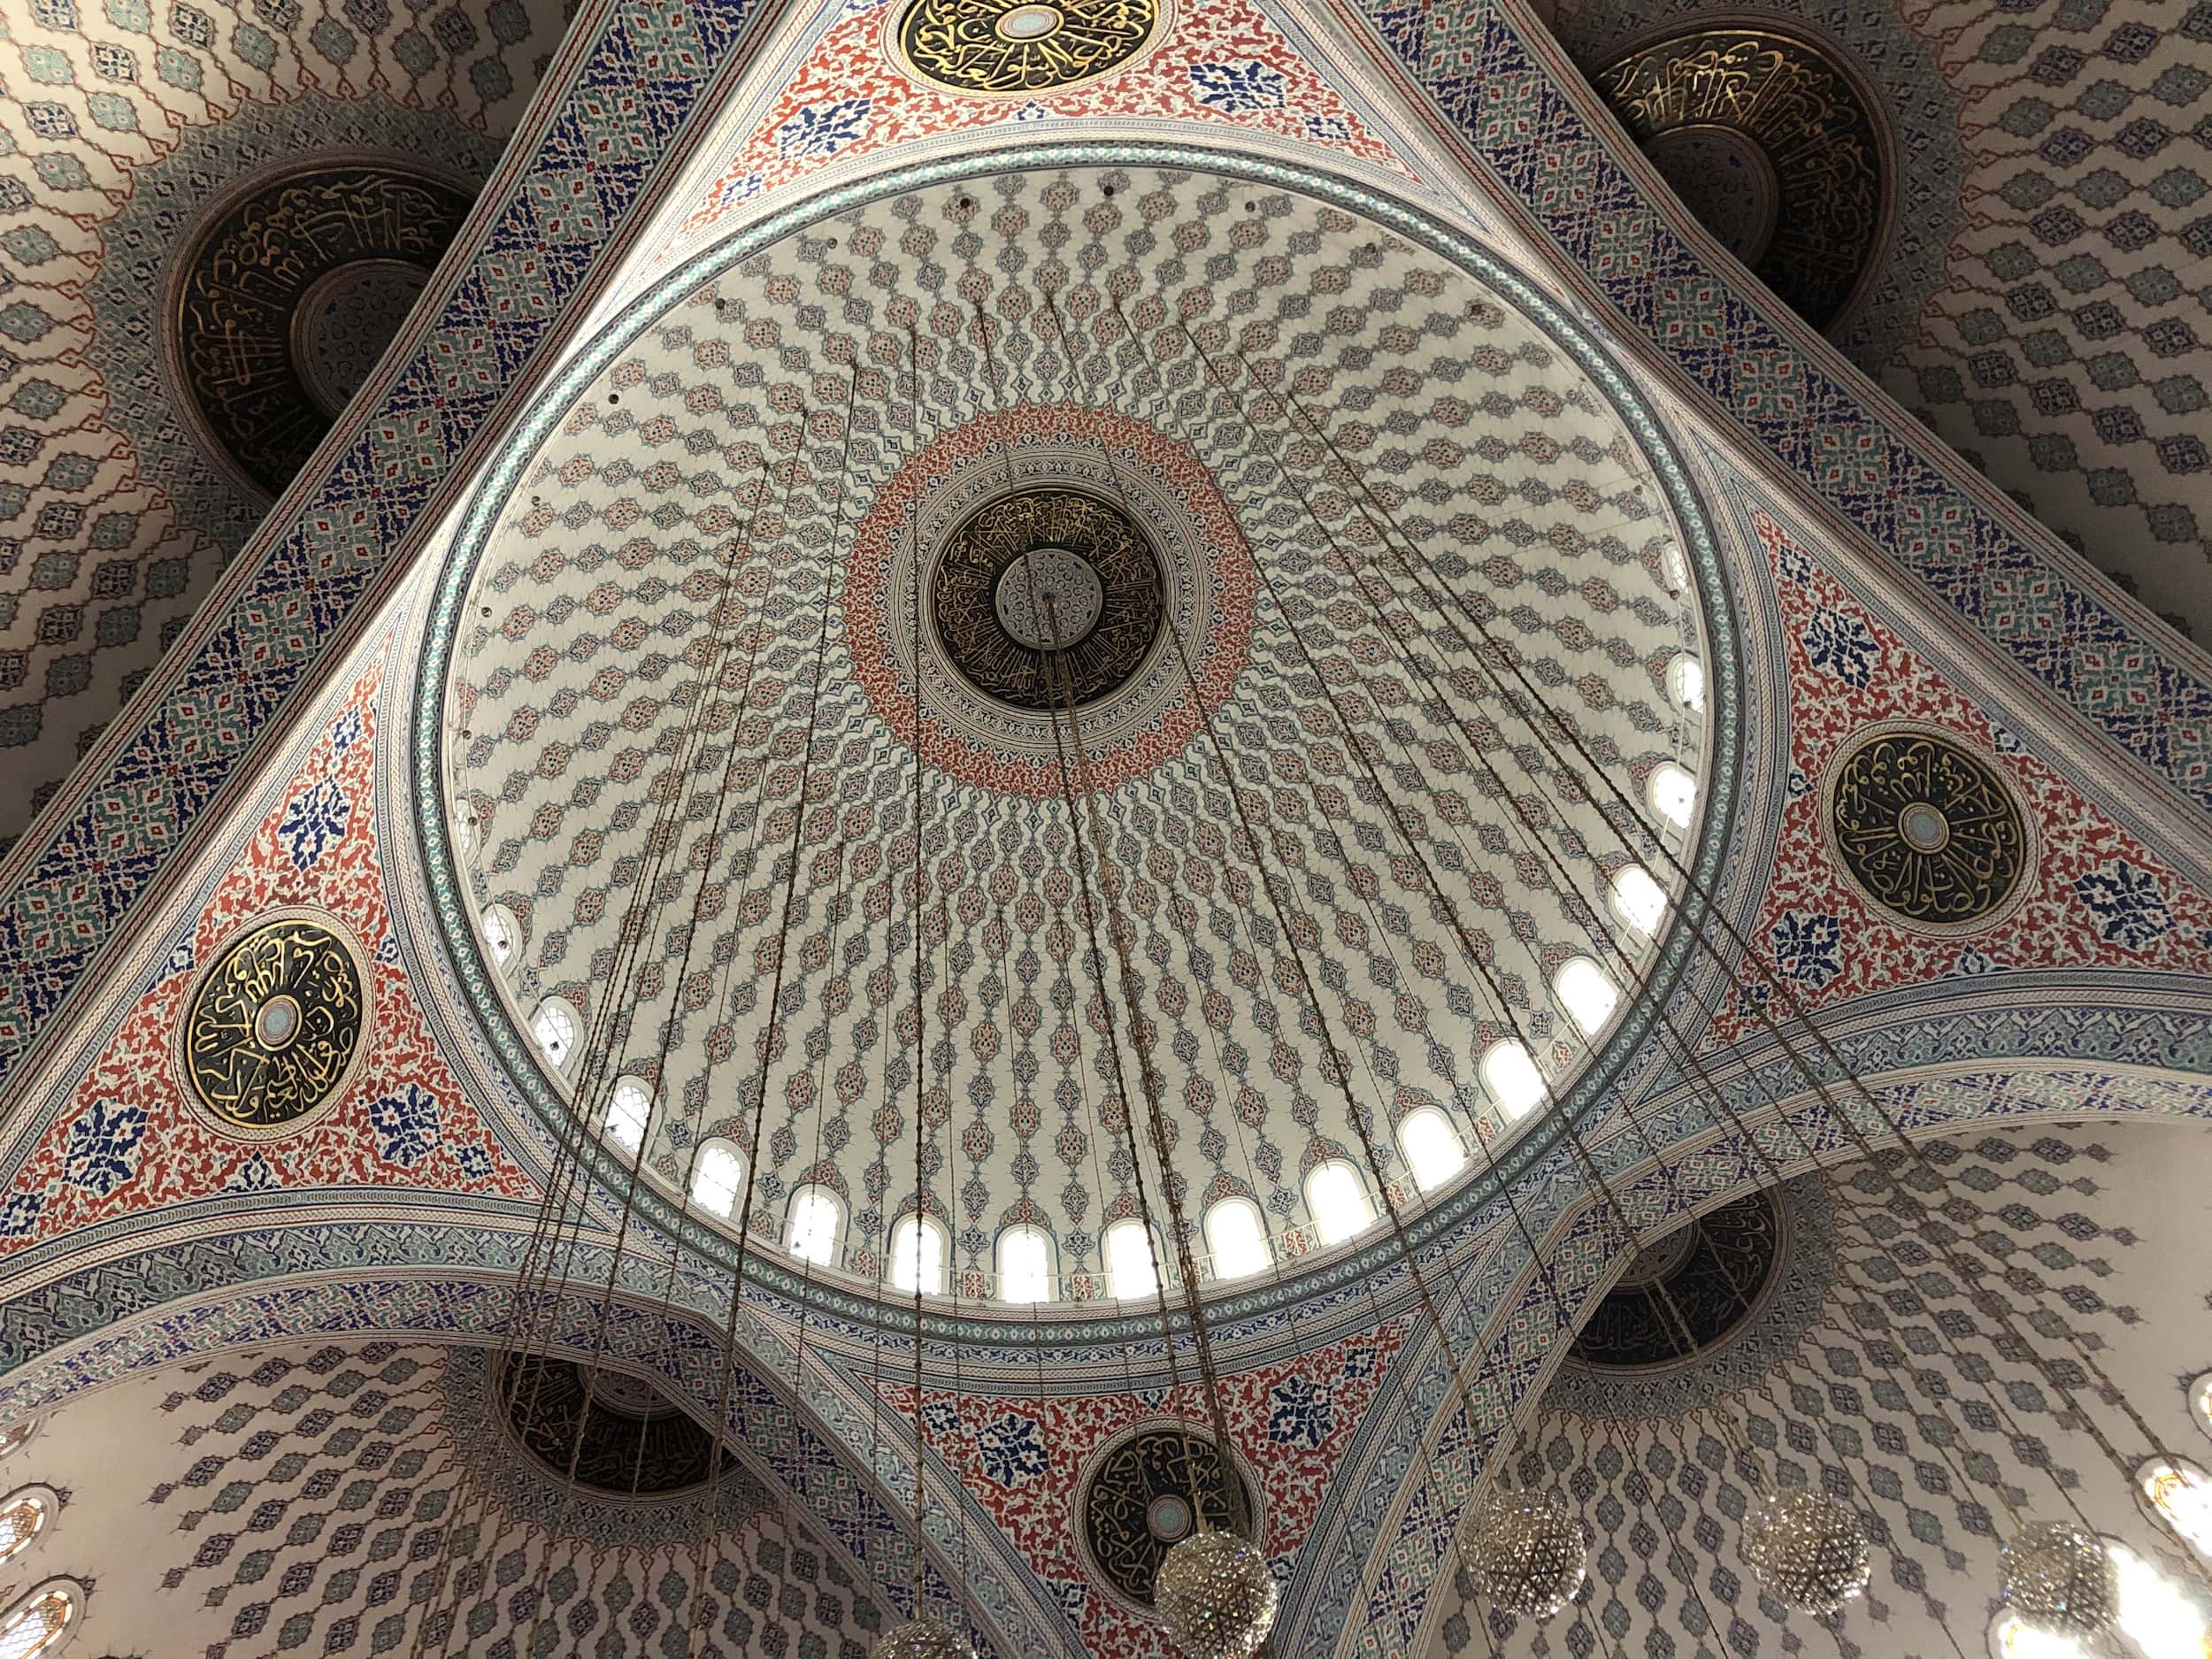 Dome of the Kocatepe Mosque in Kızılay, Ankara, Turkey